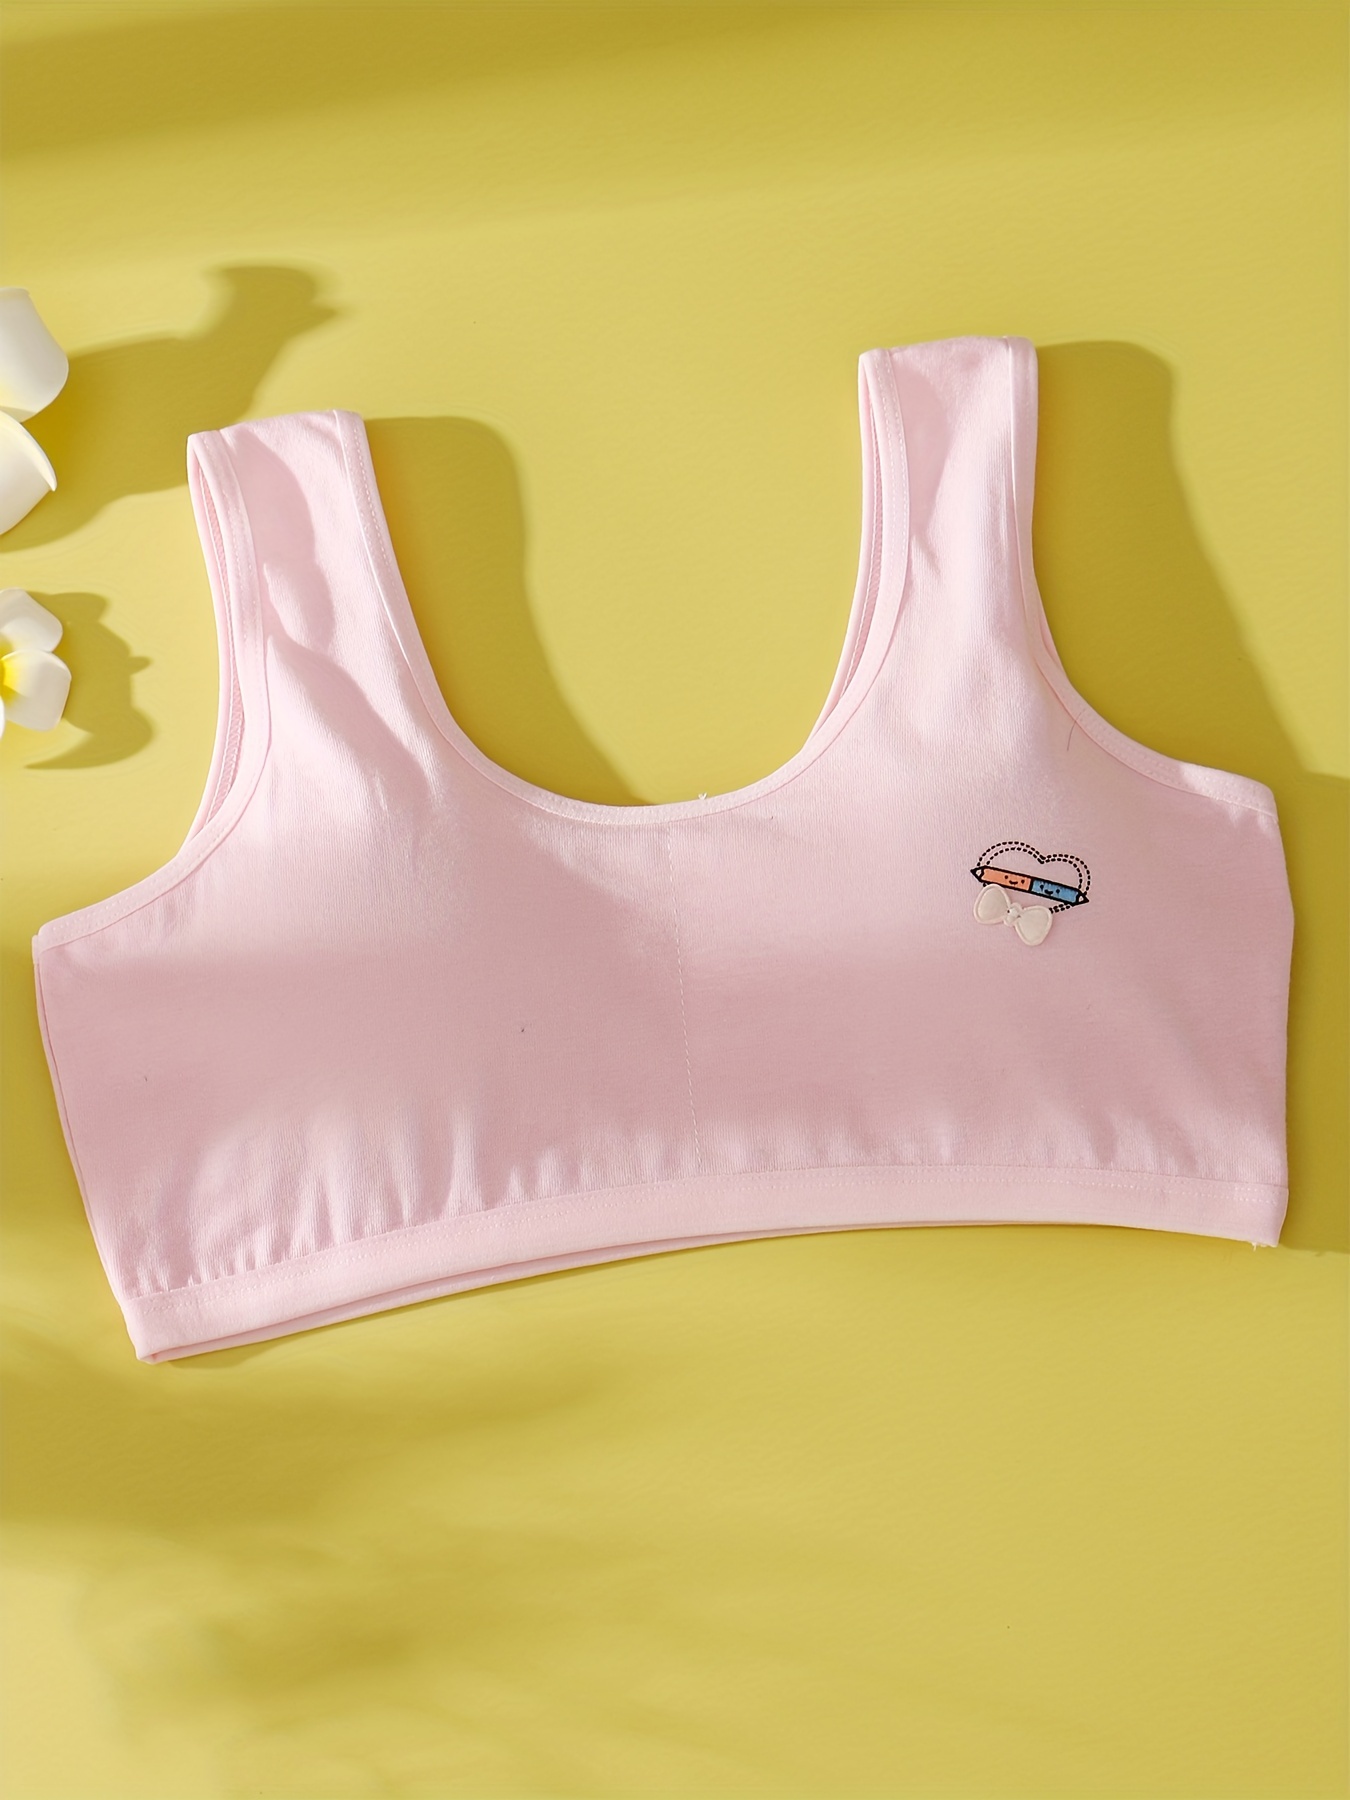 4 Pcs/Lot Children's Breast Care Girls Bras Age 8-16 Years Cotton Teens  Girls Sponge Cup Teenage Girl Underwear Kids Vest